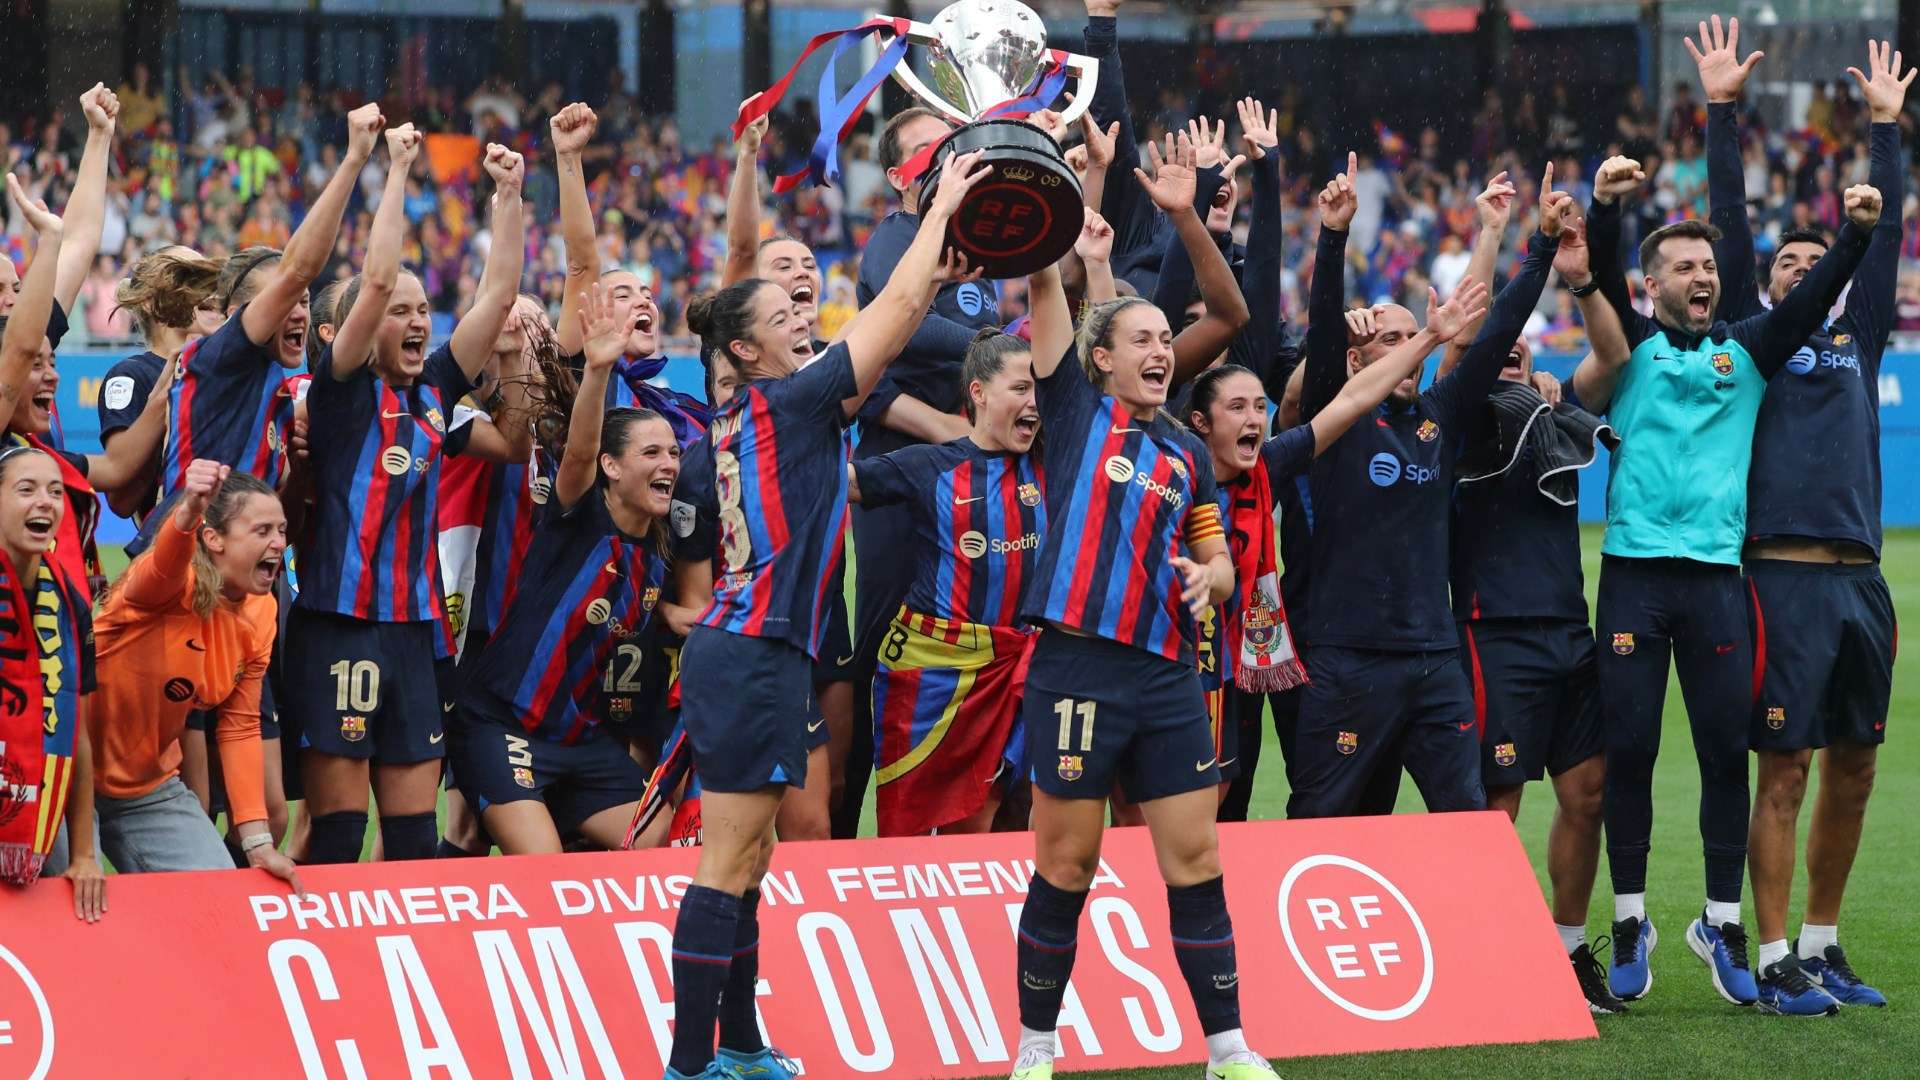 Barcelona-Femeni-champions